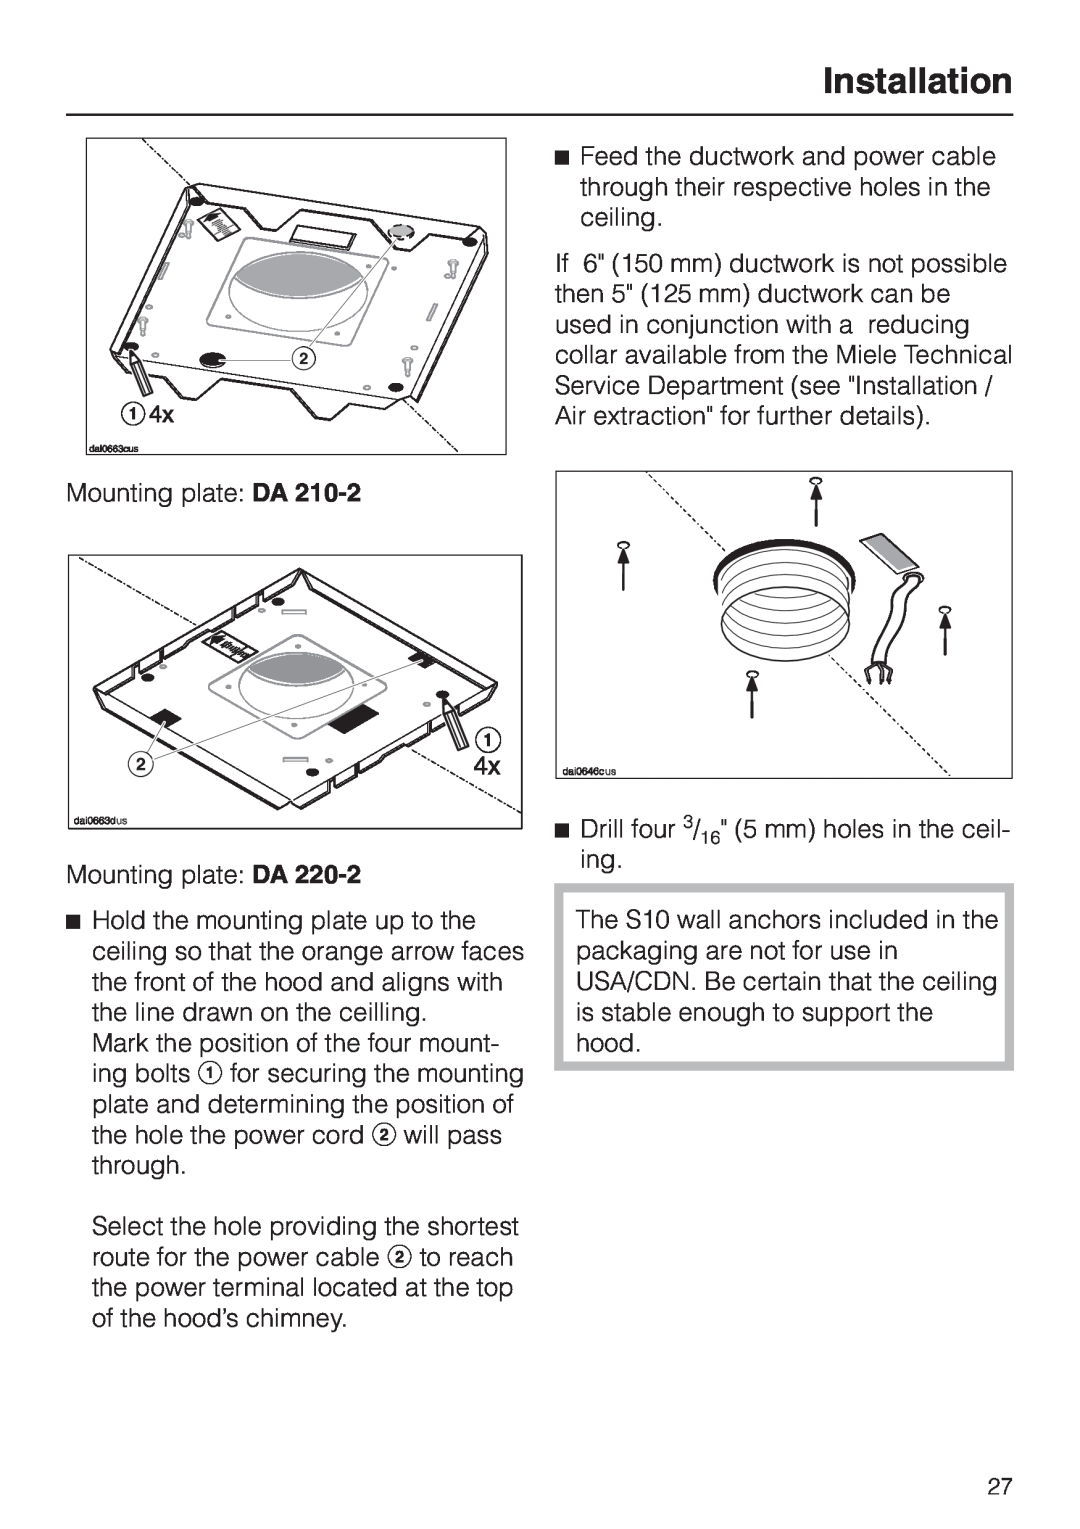 Miele DA210-3 installation instructions Installation, Mounting plate DA Mounting plate DA 